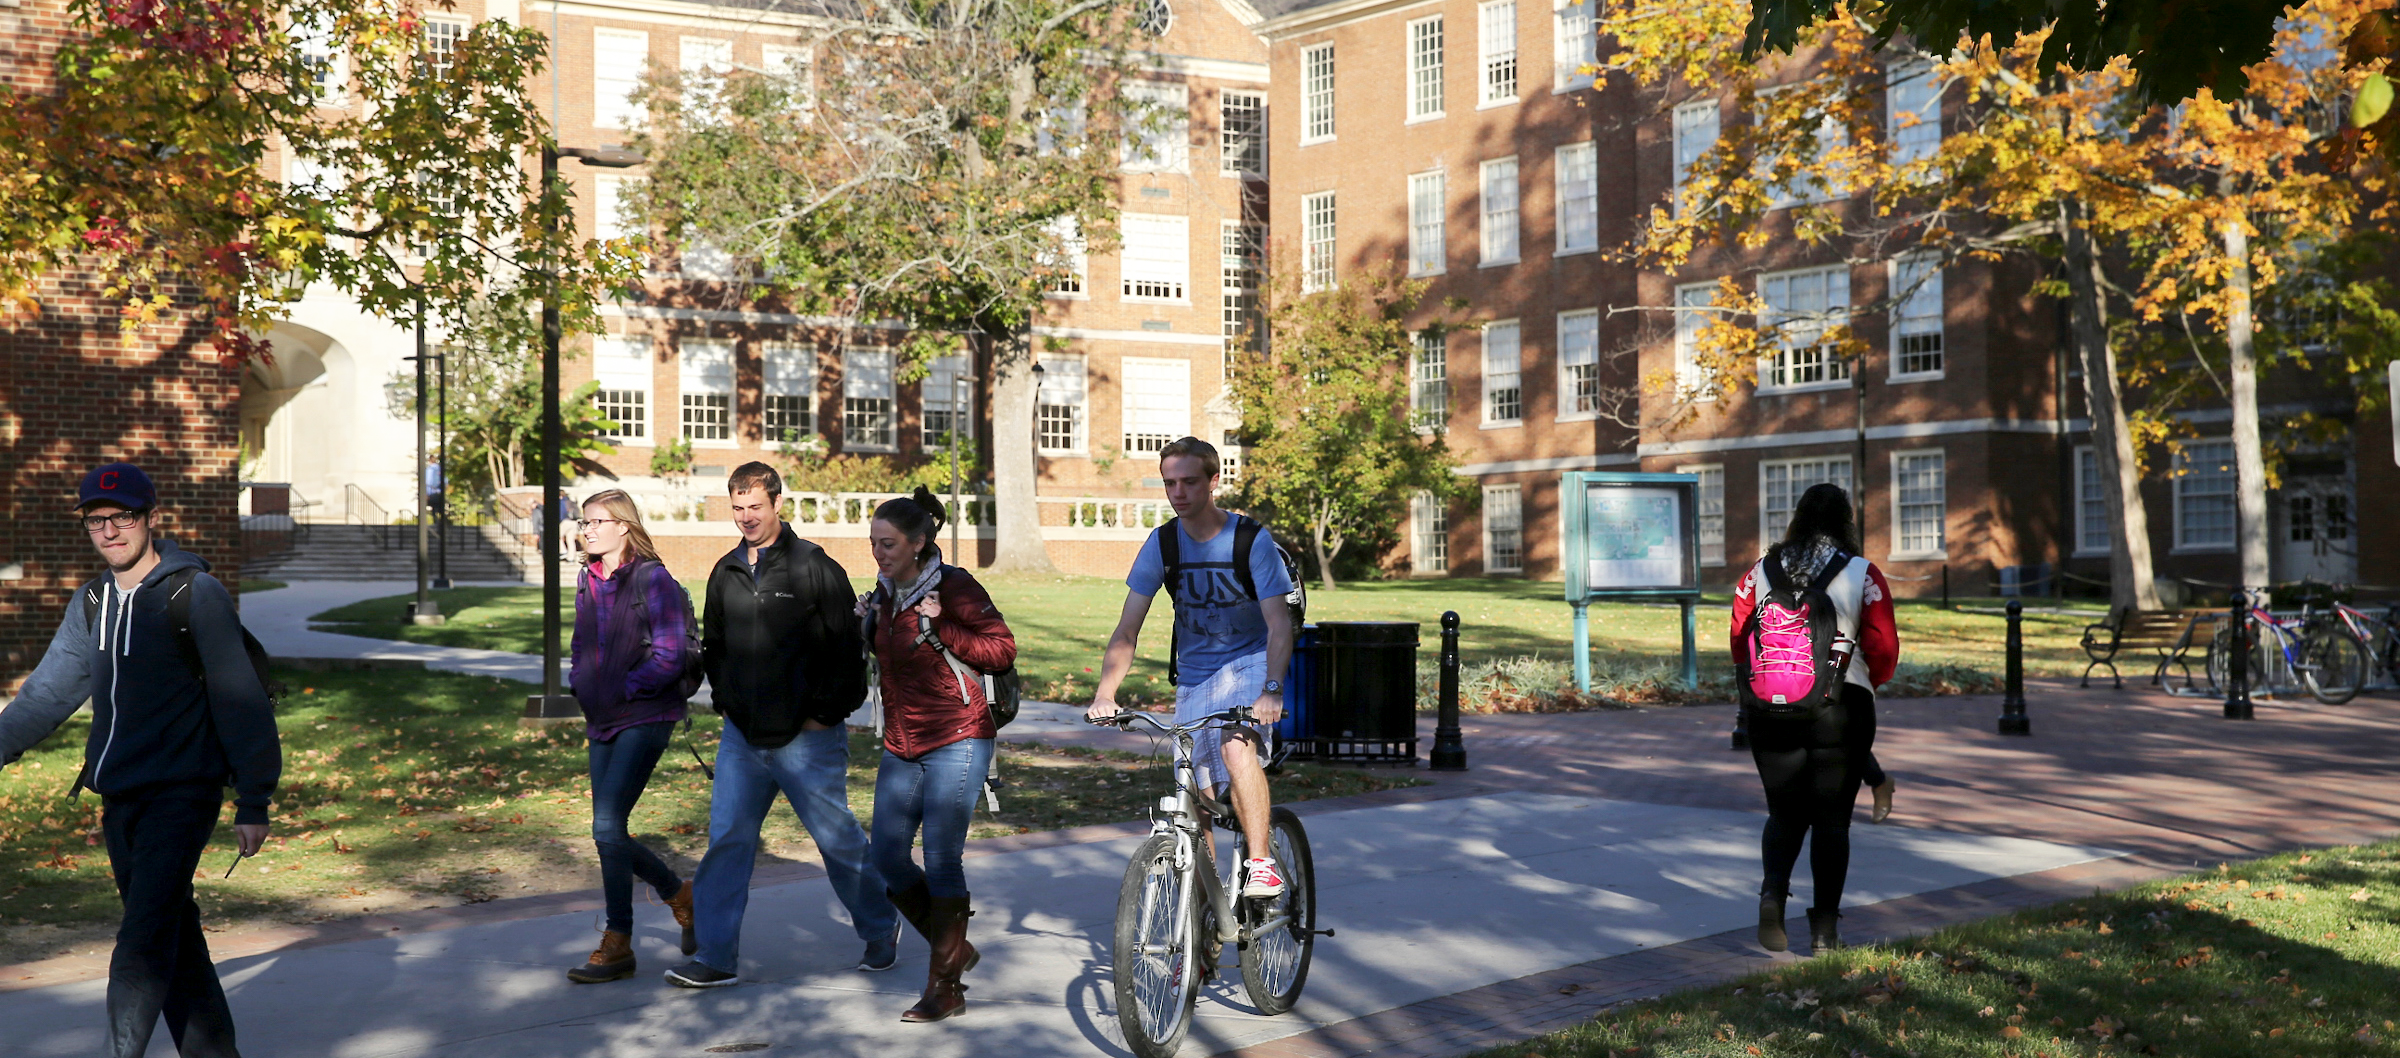 Students walk and ride bikes near Upham Hall